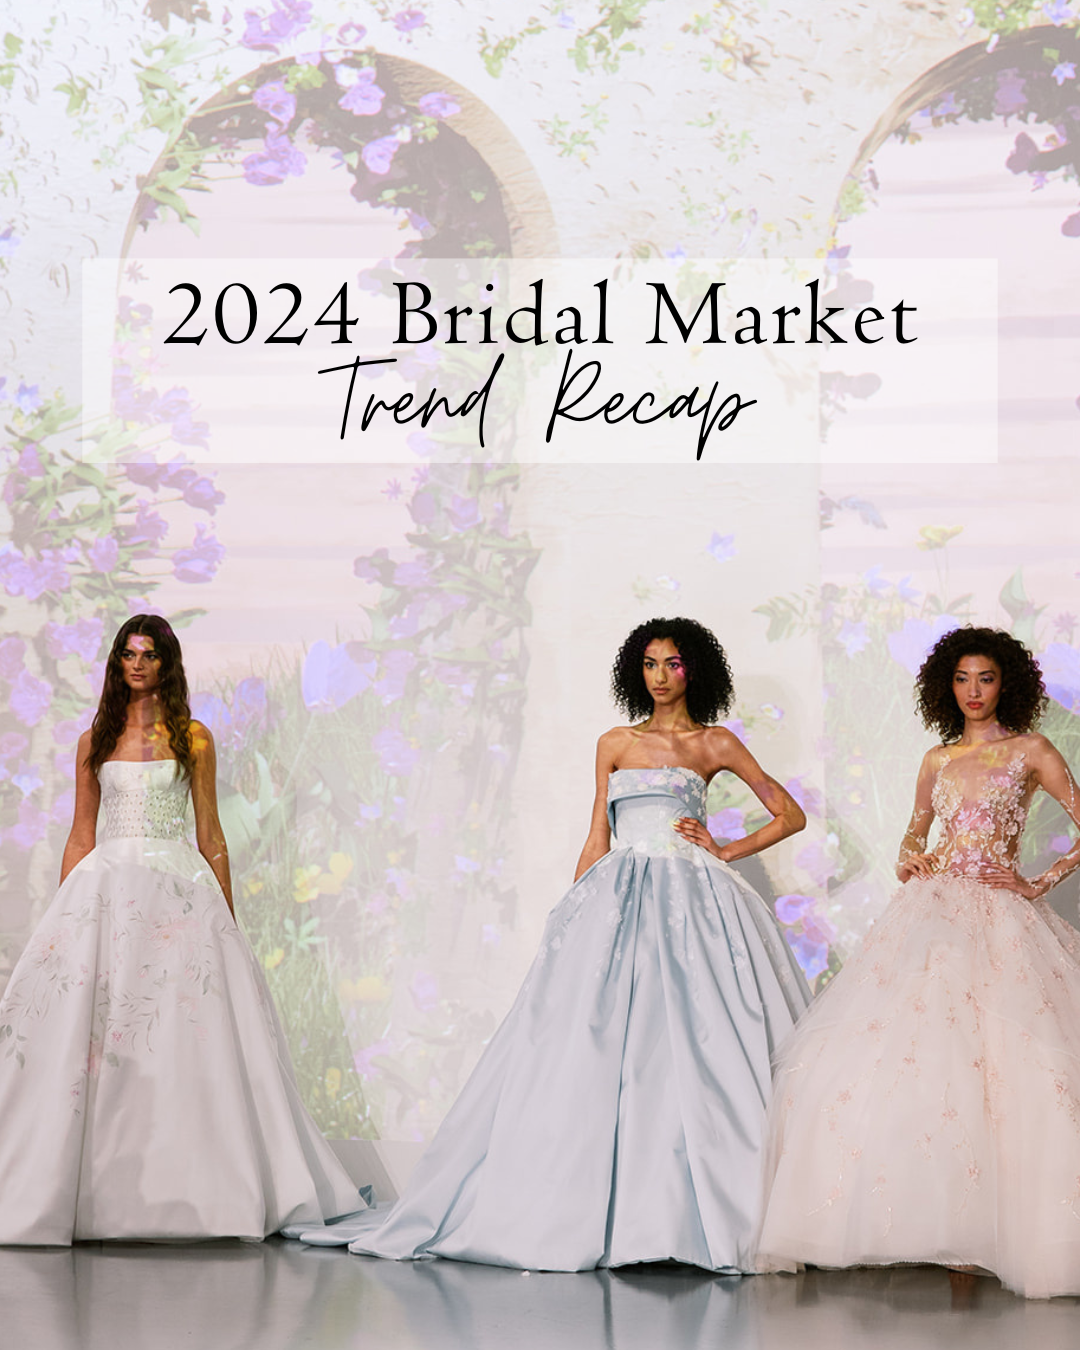 Spring Bridal Market: Trend Recap Image